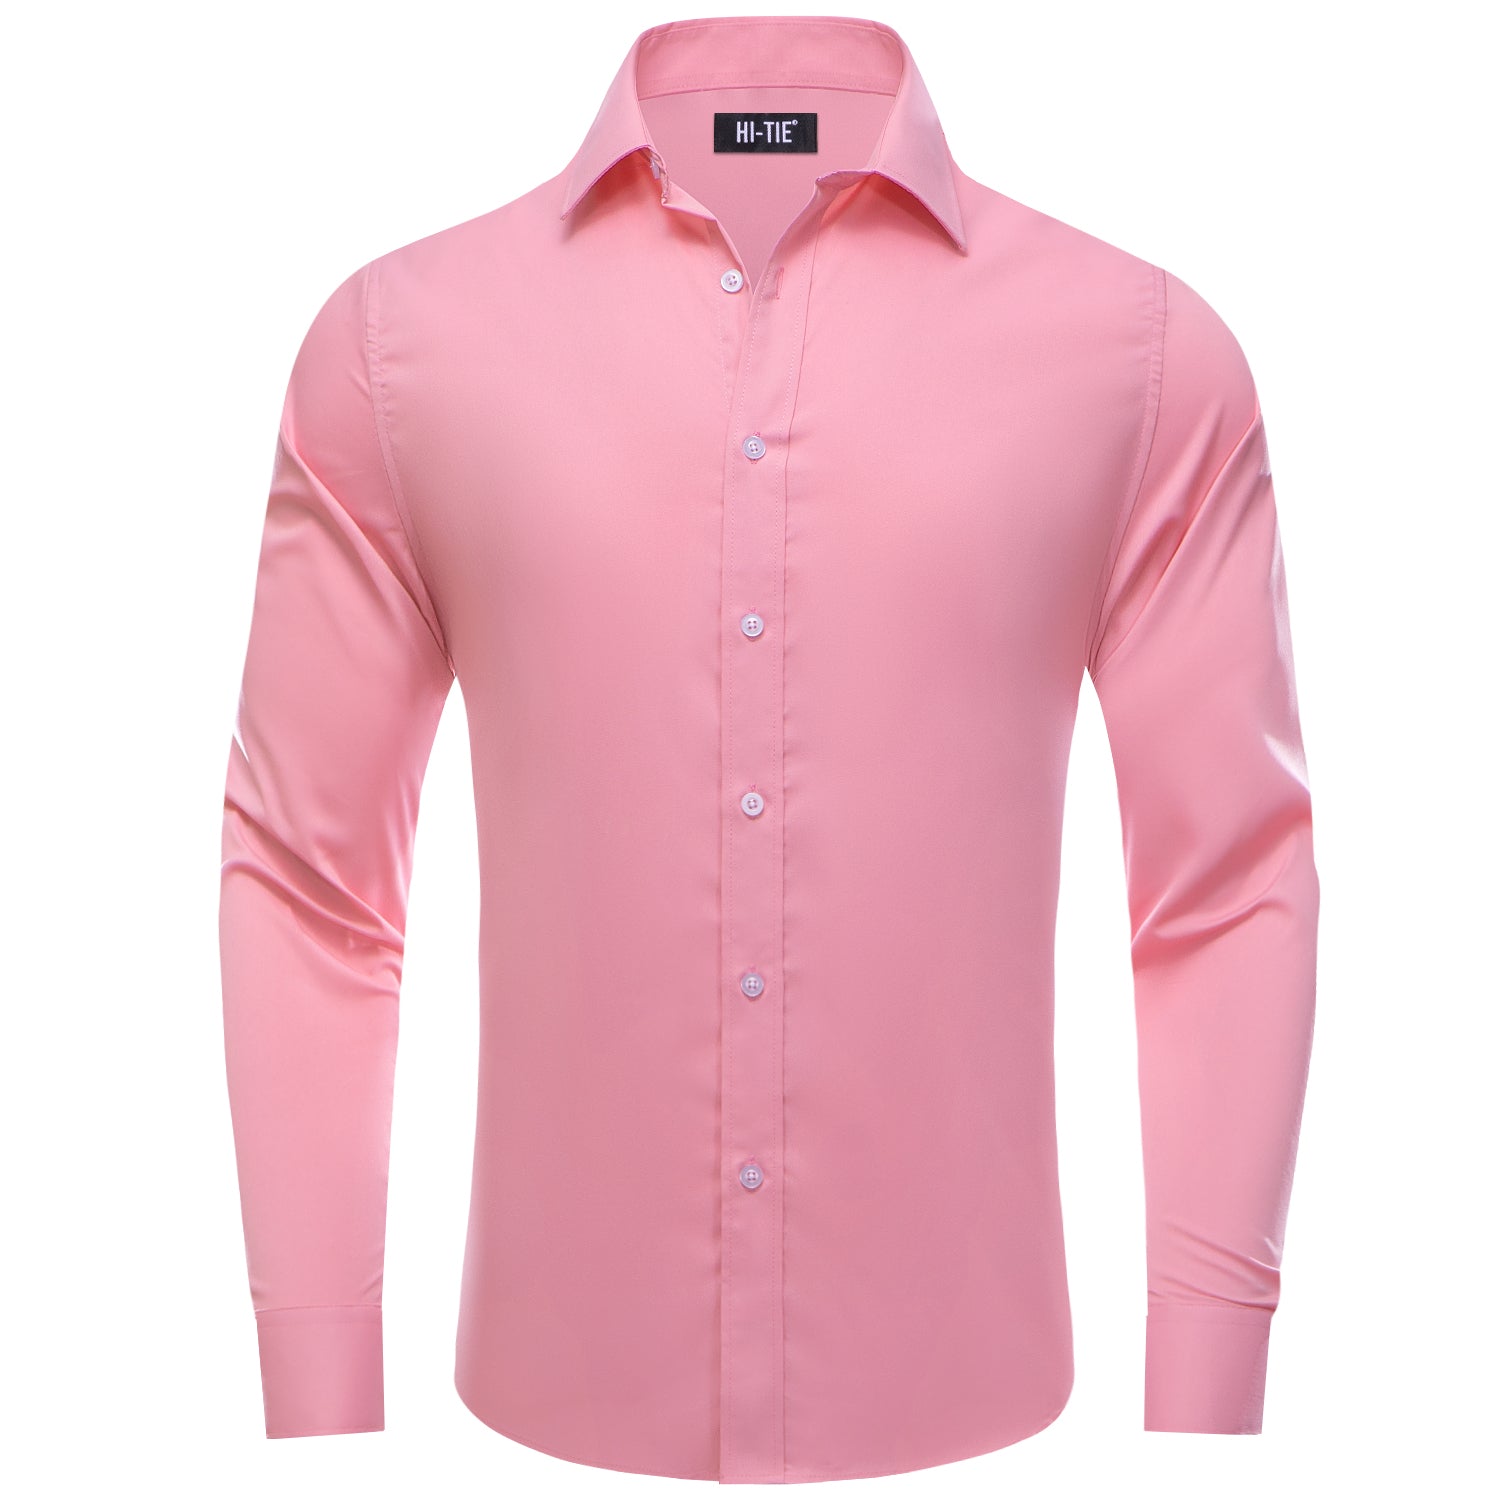 Hi-Tie Long Sleeve Shirt Pink Solid Mens Dress Shirt